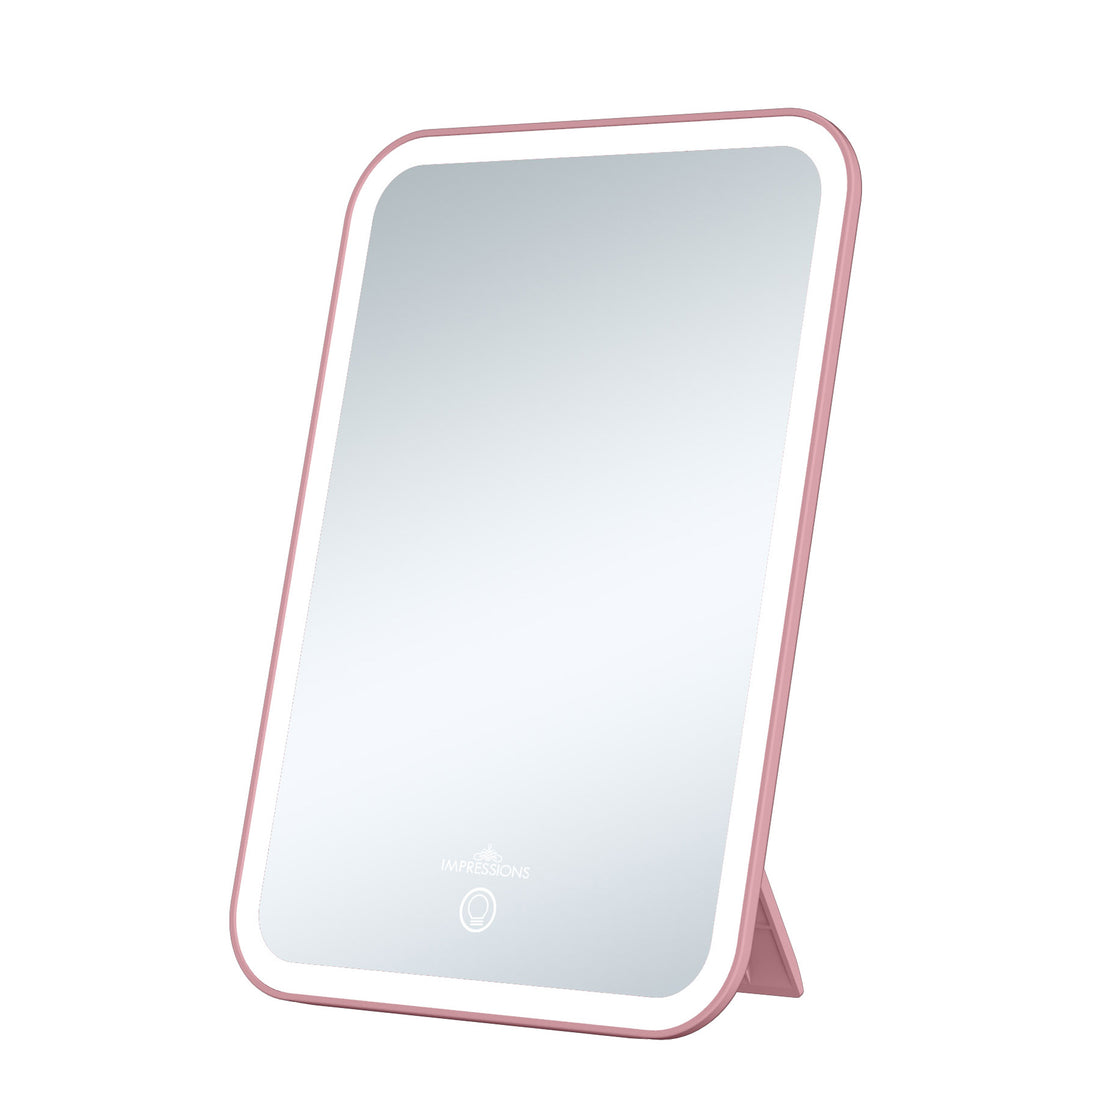 Glo Tech Portable LED Beauty Mirror w/ Smart Phone Holder Makeup